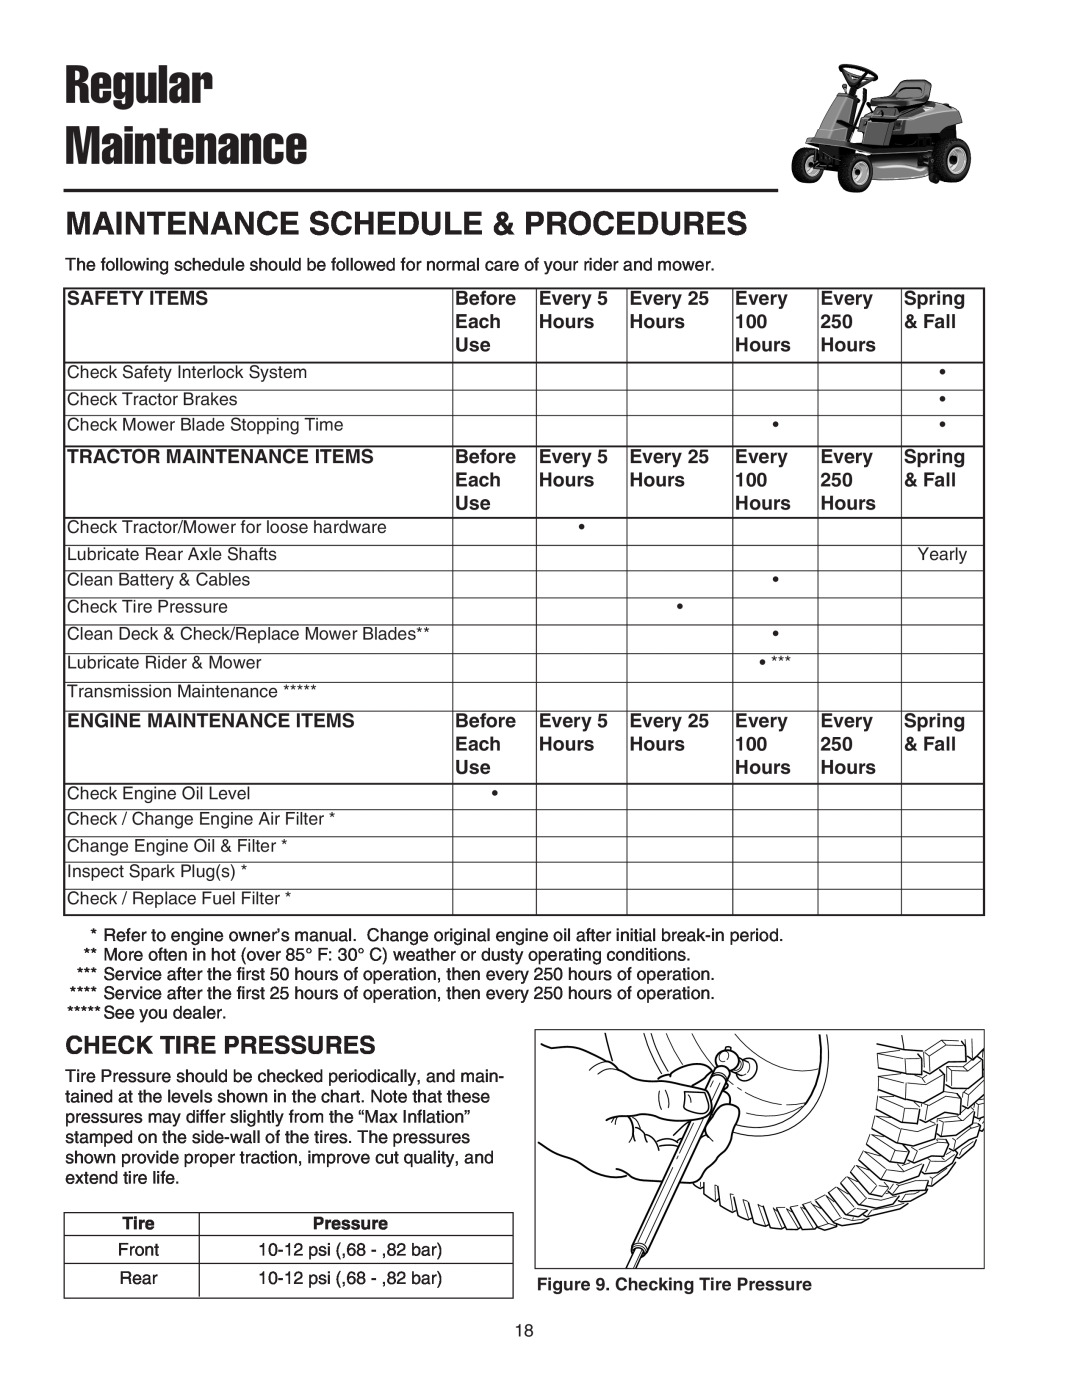 Snapper 400 Series manual Regular Maintenance, Maintenance Schedule & Procedures, Check Tire Pressures 